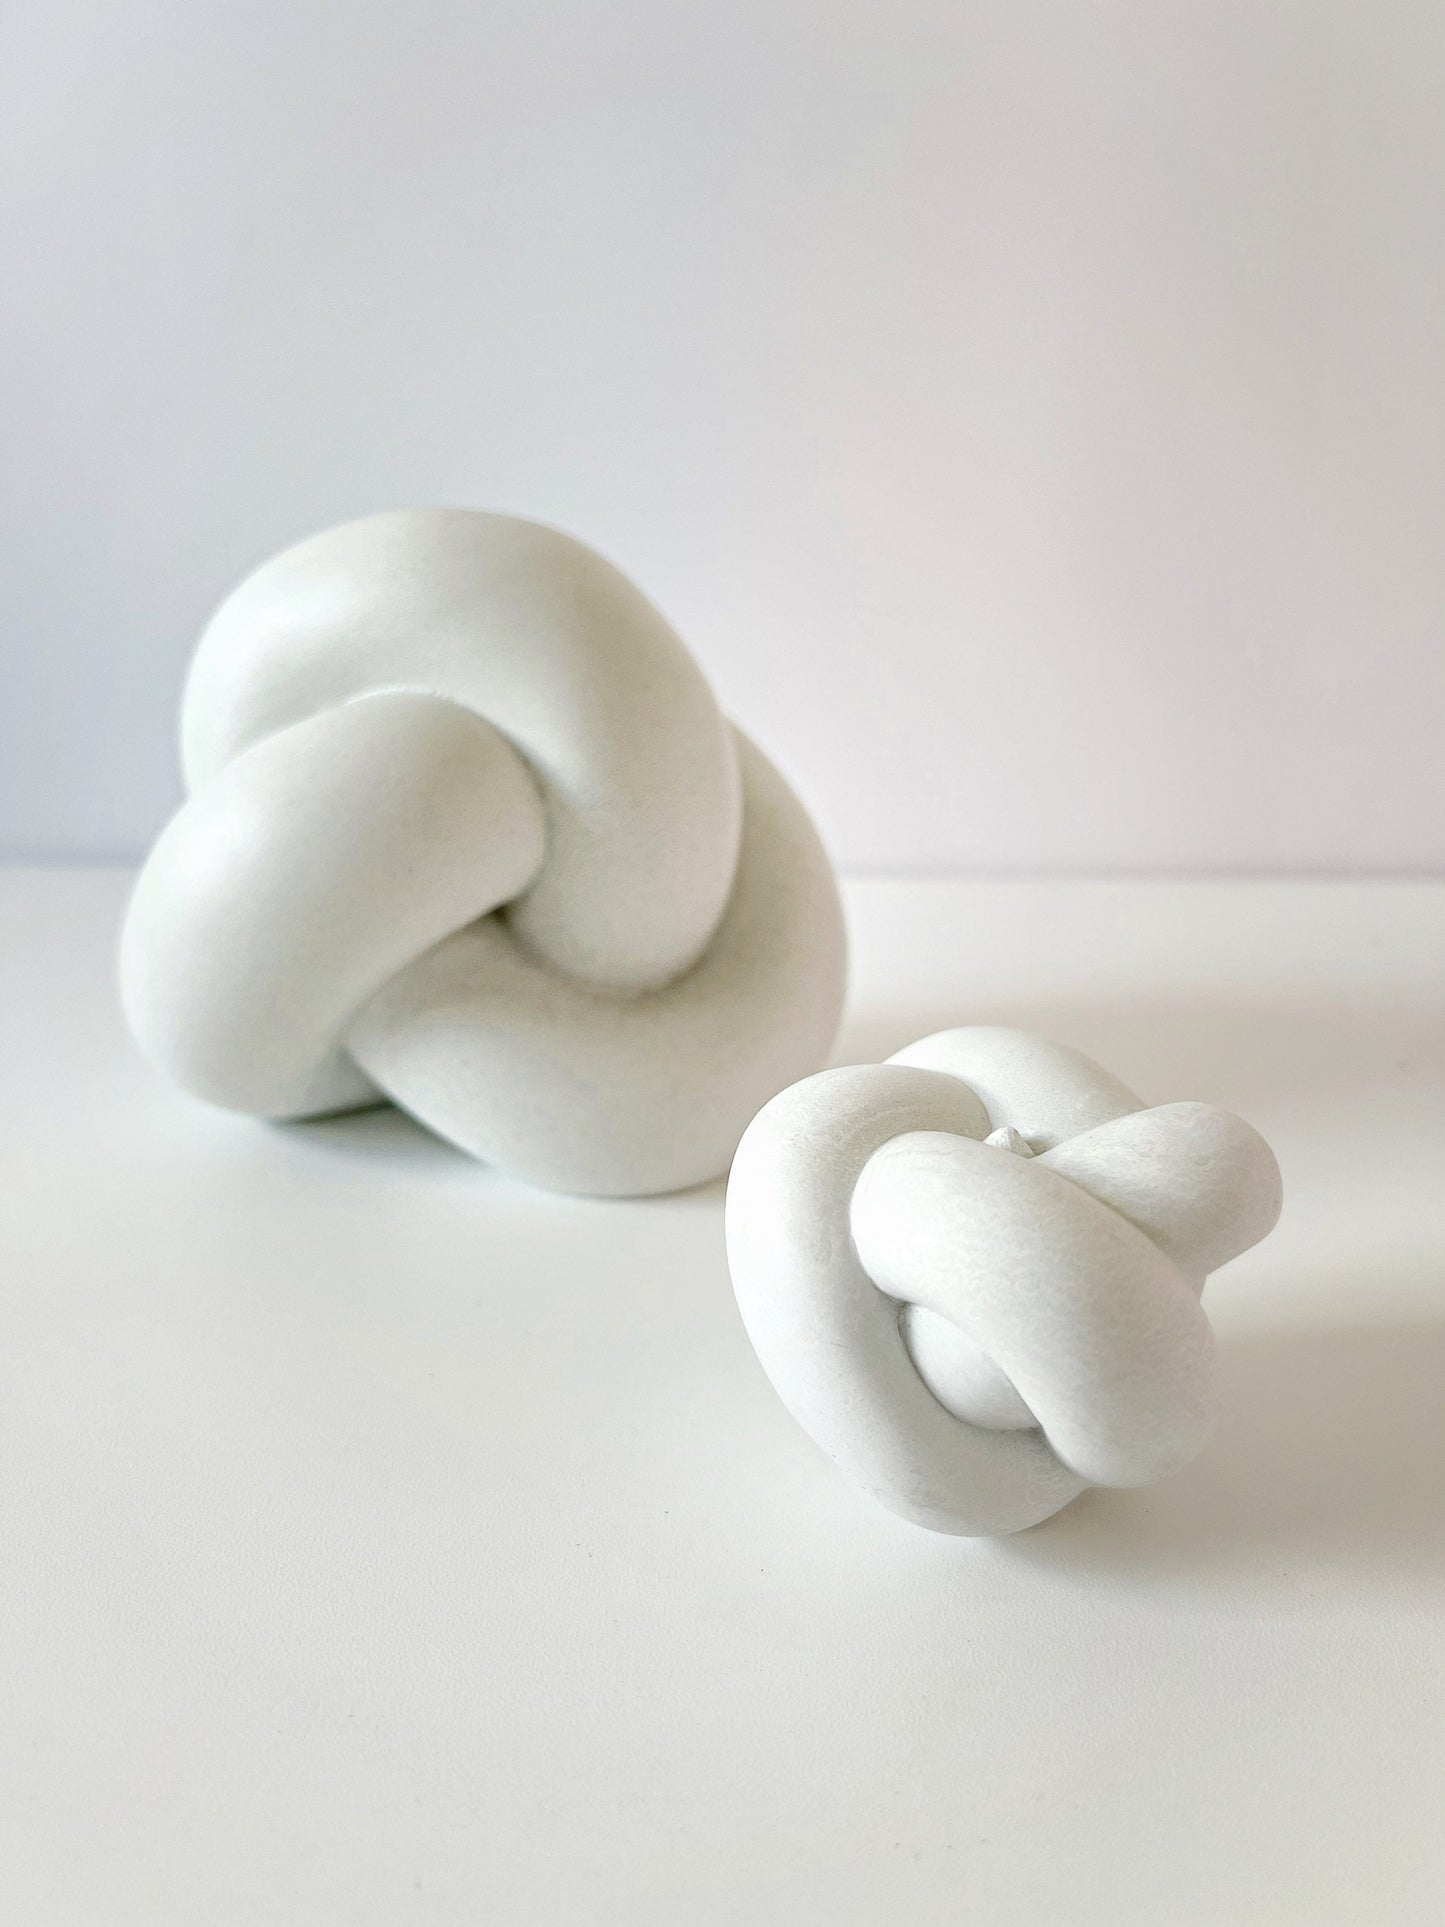 Laqrge Sculptural Knot Figurine